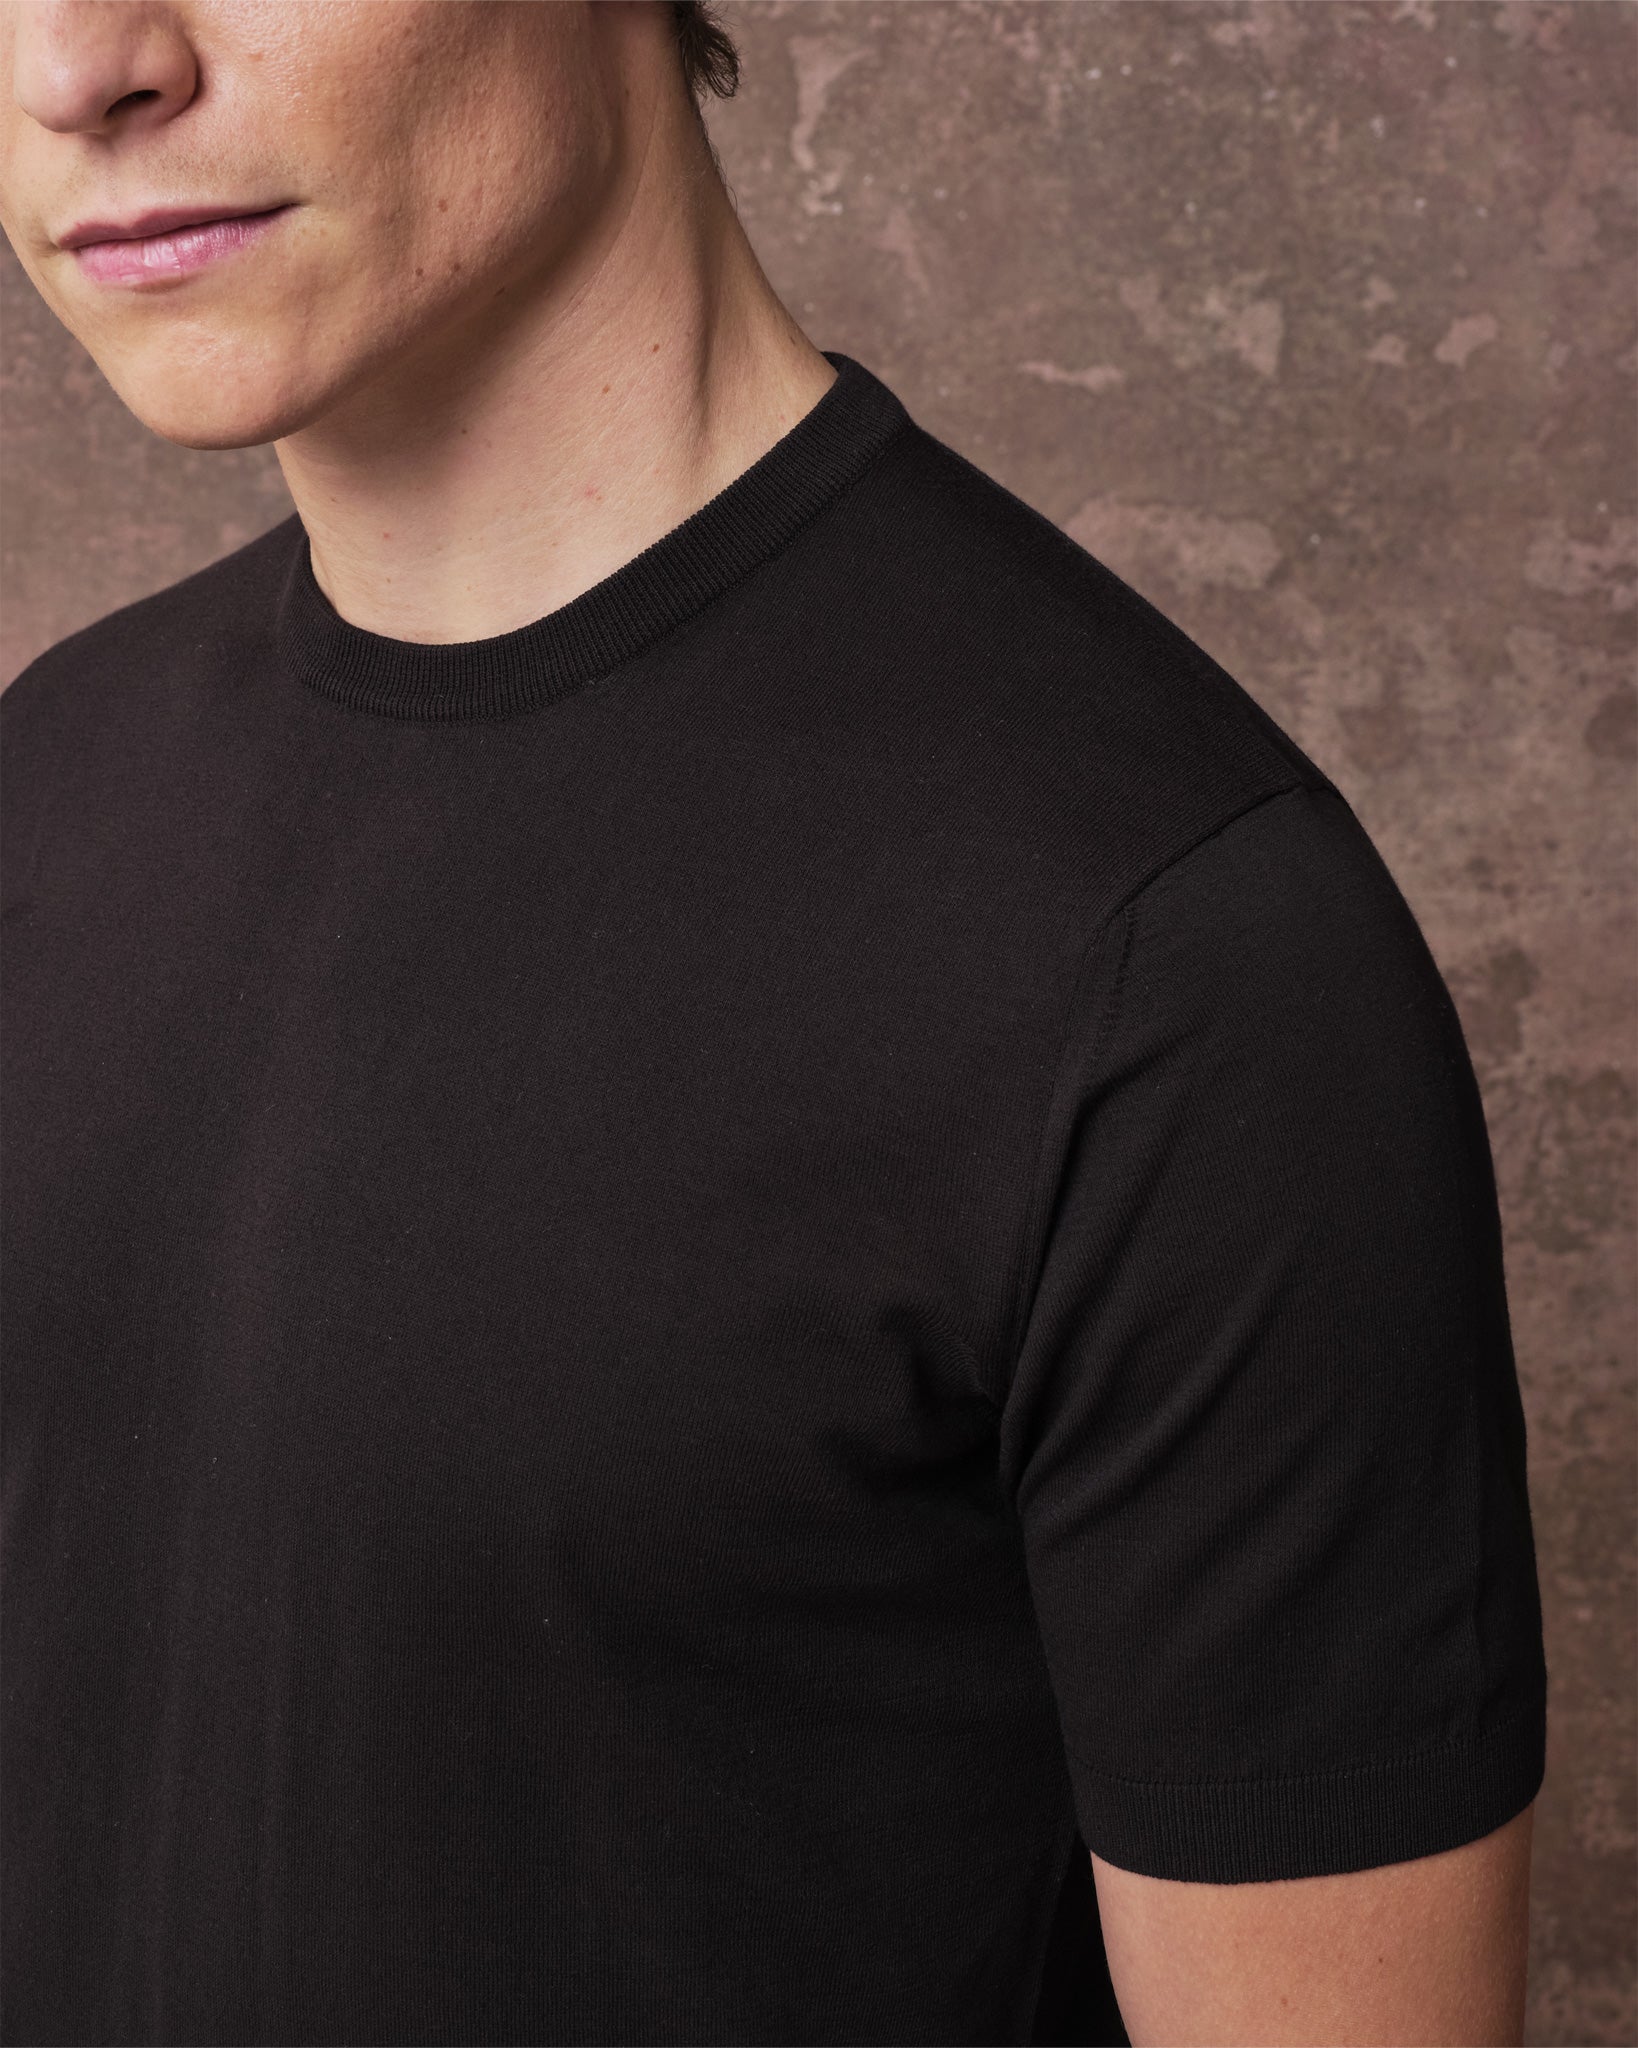 Black Silk Blend T-Shirt – Edward Sexton